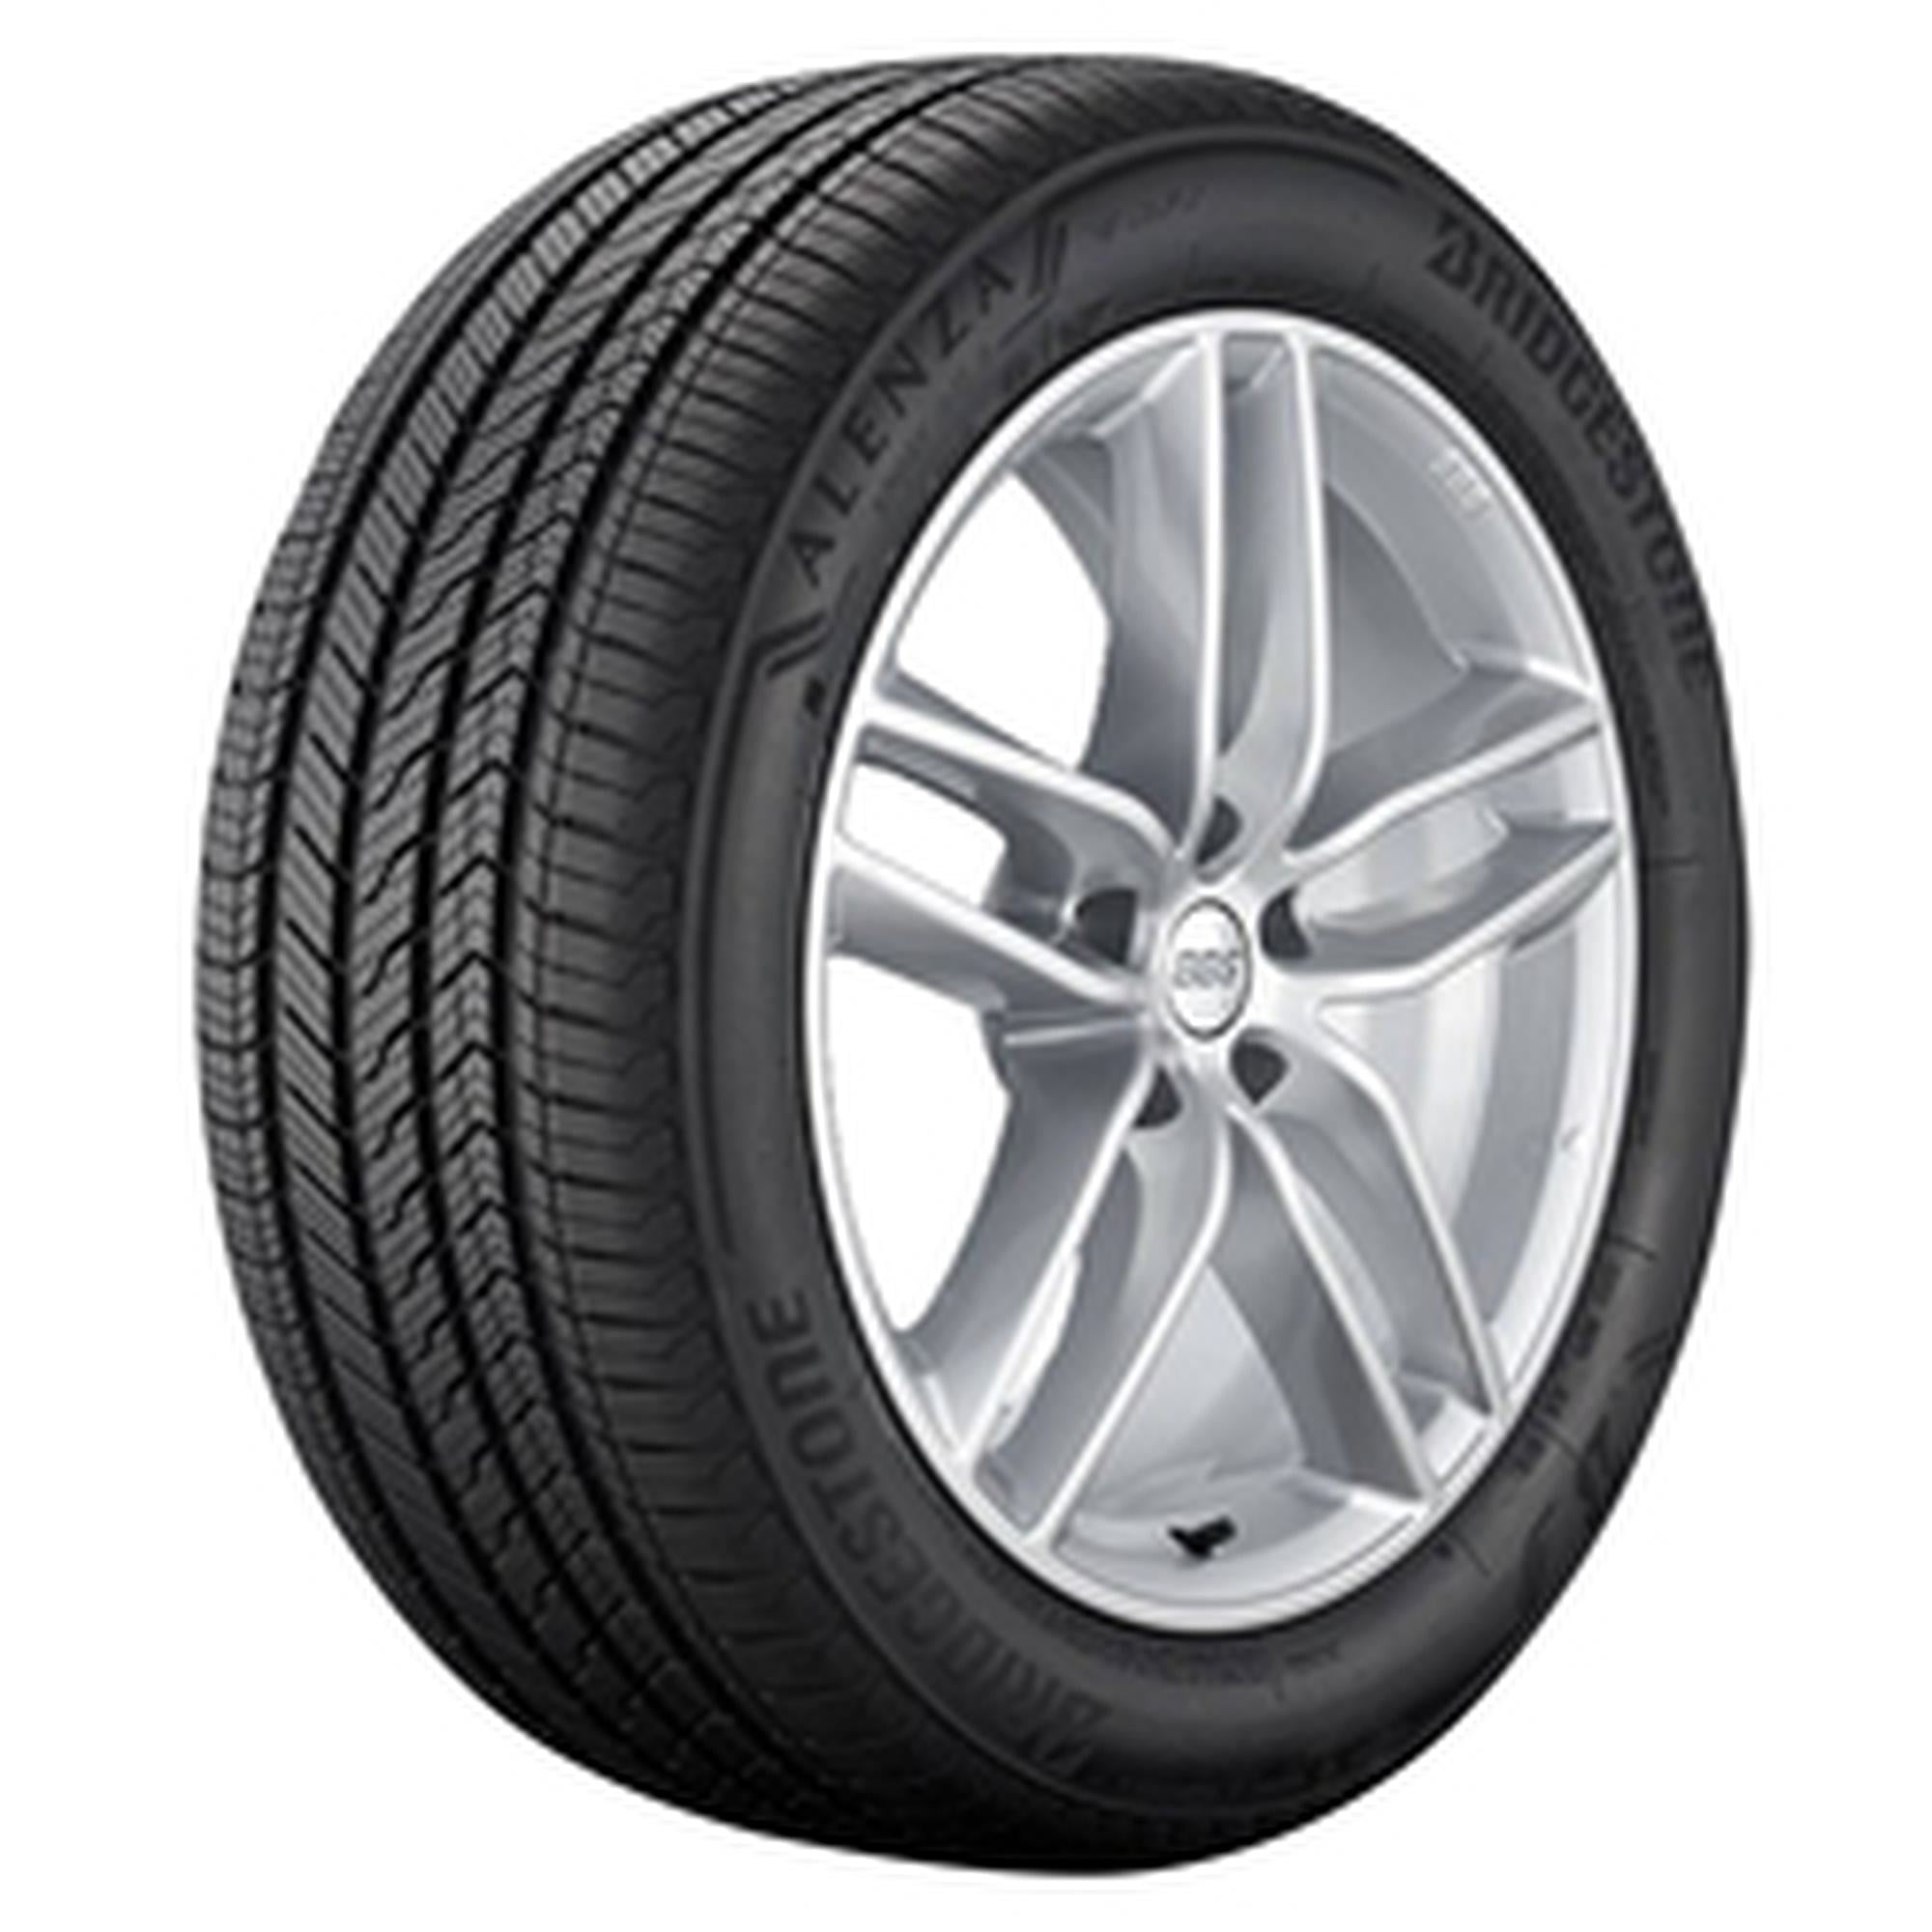 Bridgestone Alenza Sport A/S UHP All Season 255/55R19 107H Passenger Tire